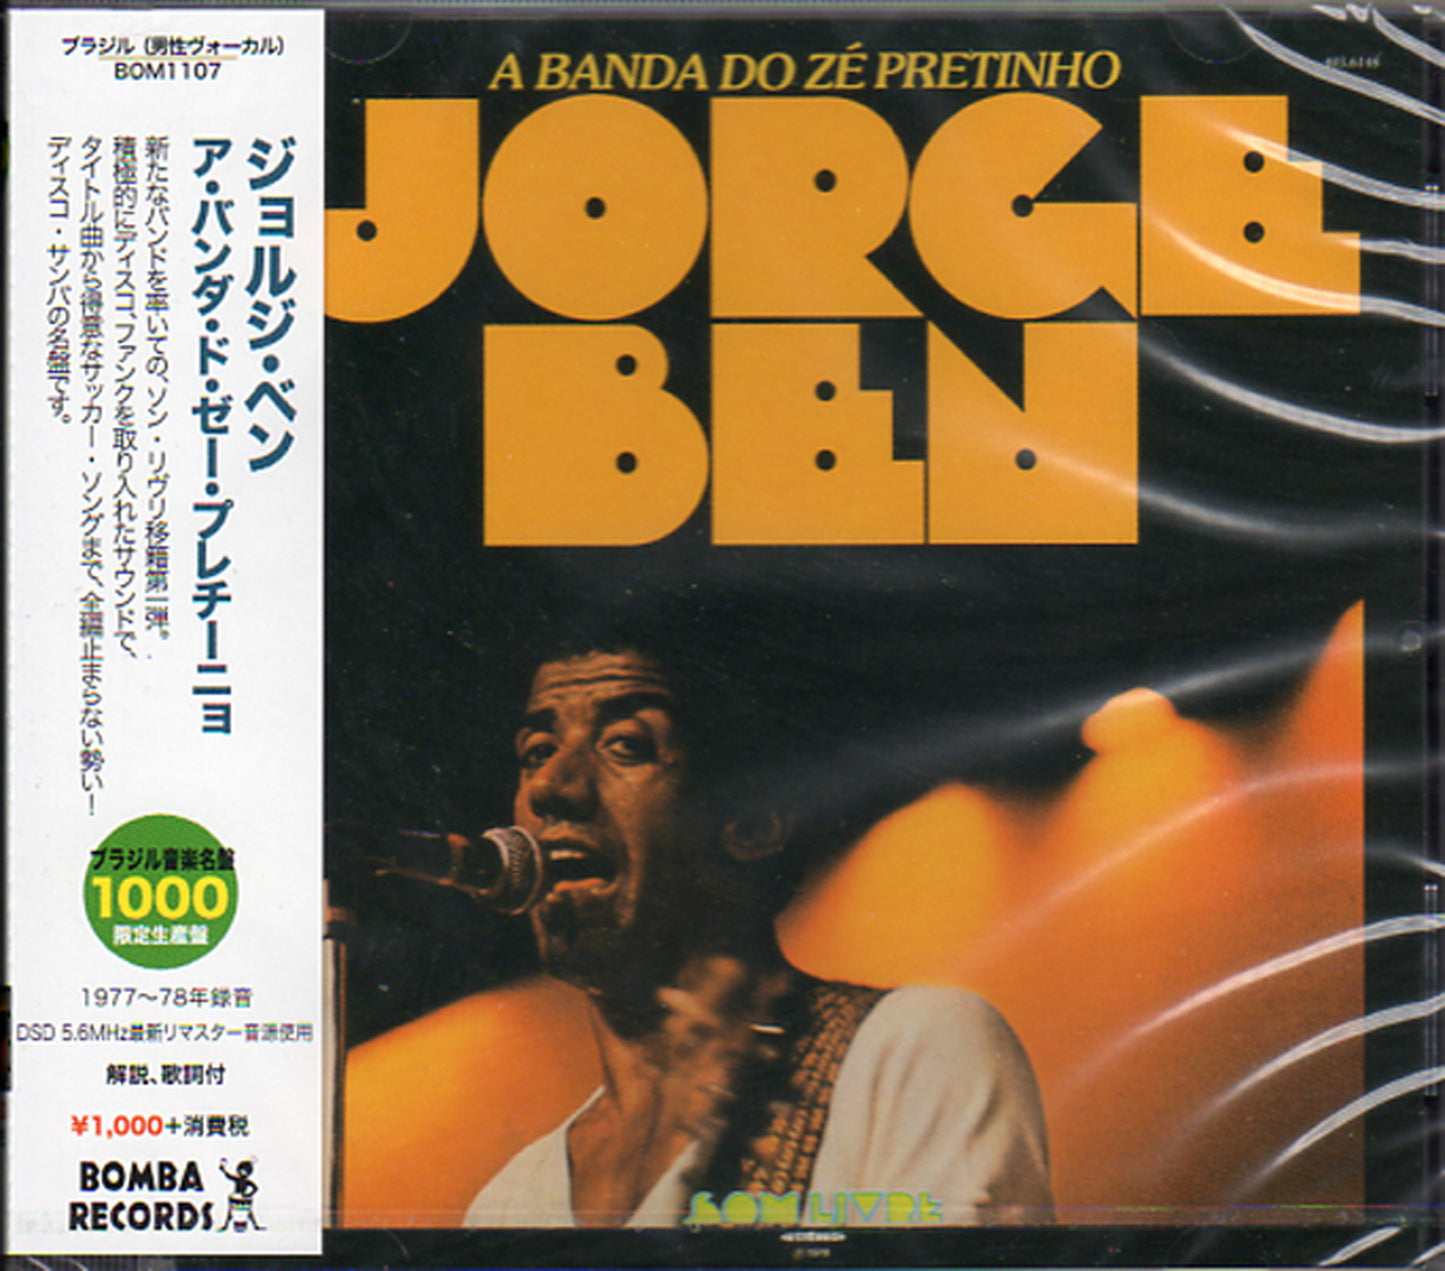 Jorge Ben - A Banda Ze Pretinho - Japan  CD Limited Edition